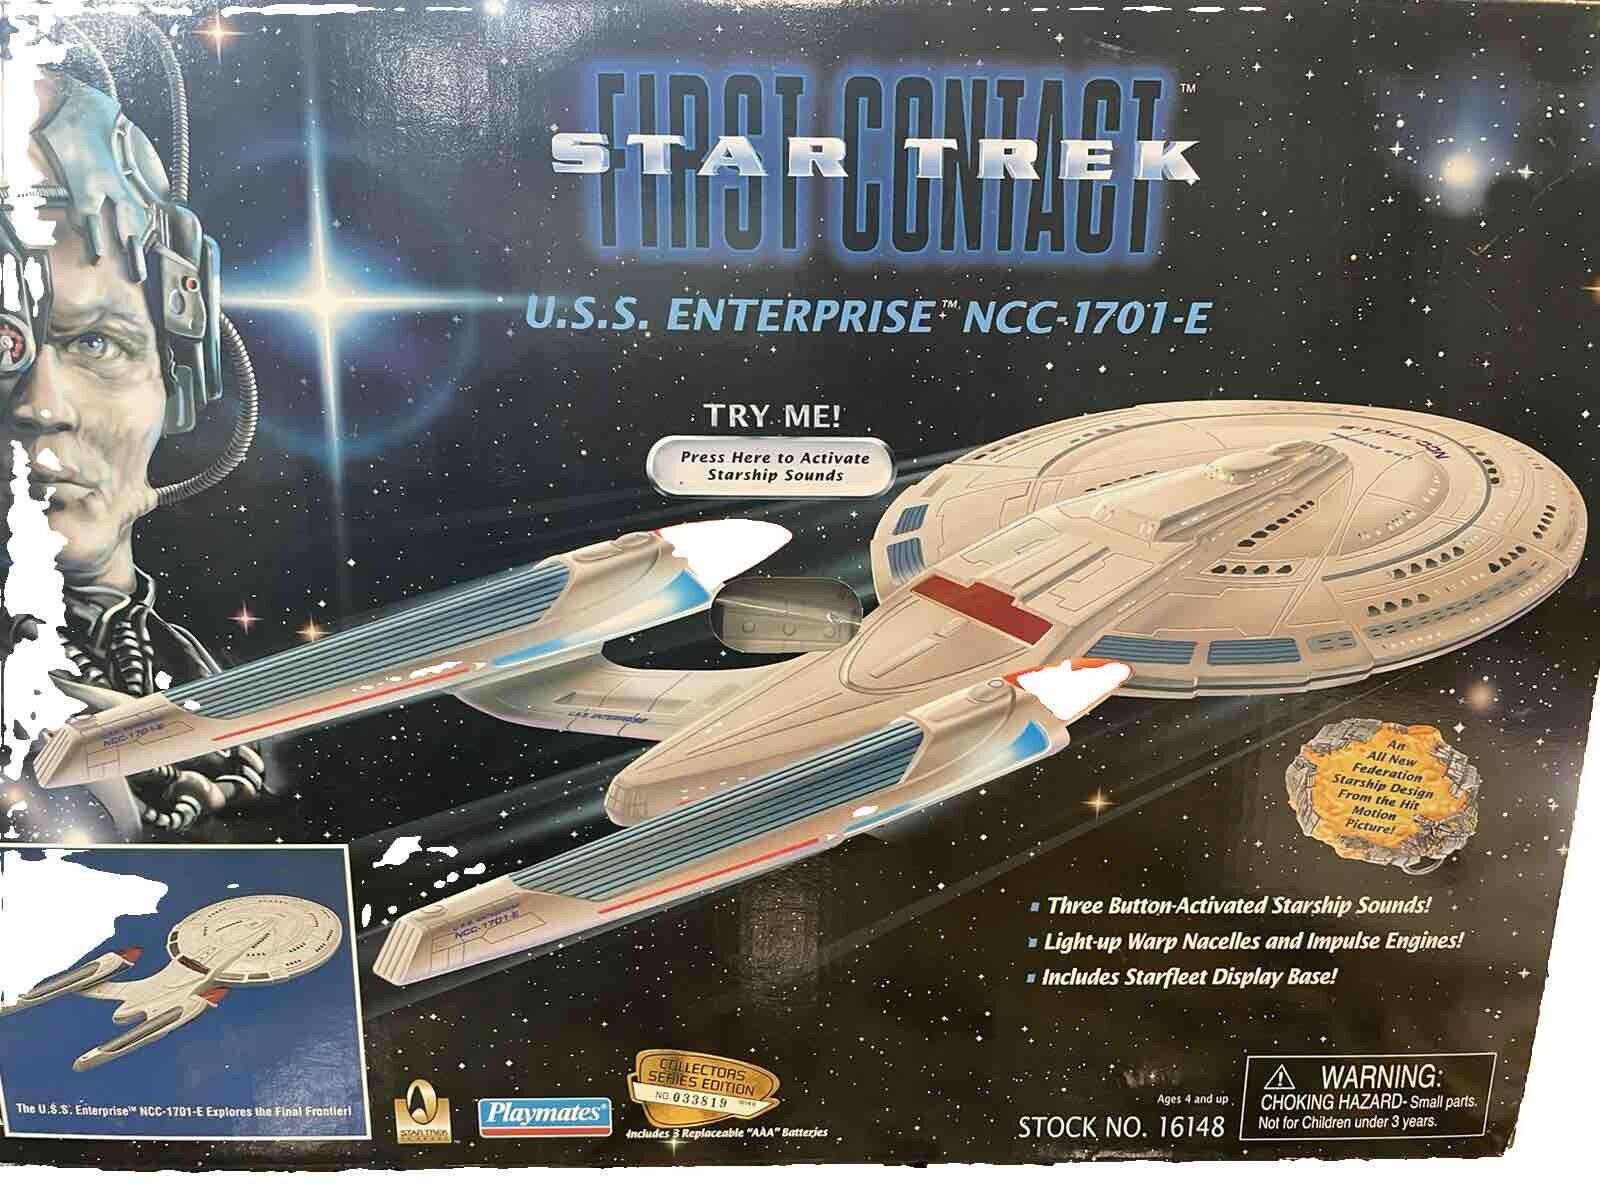 1996 STAR TREK First Contact USS Enterprise NCC-1701E by Playmates